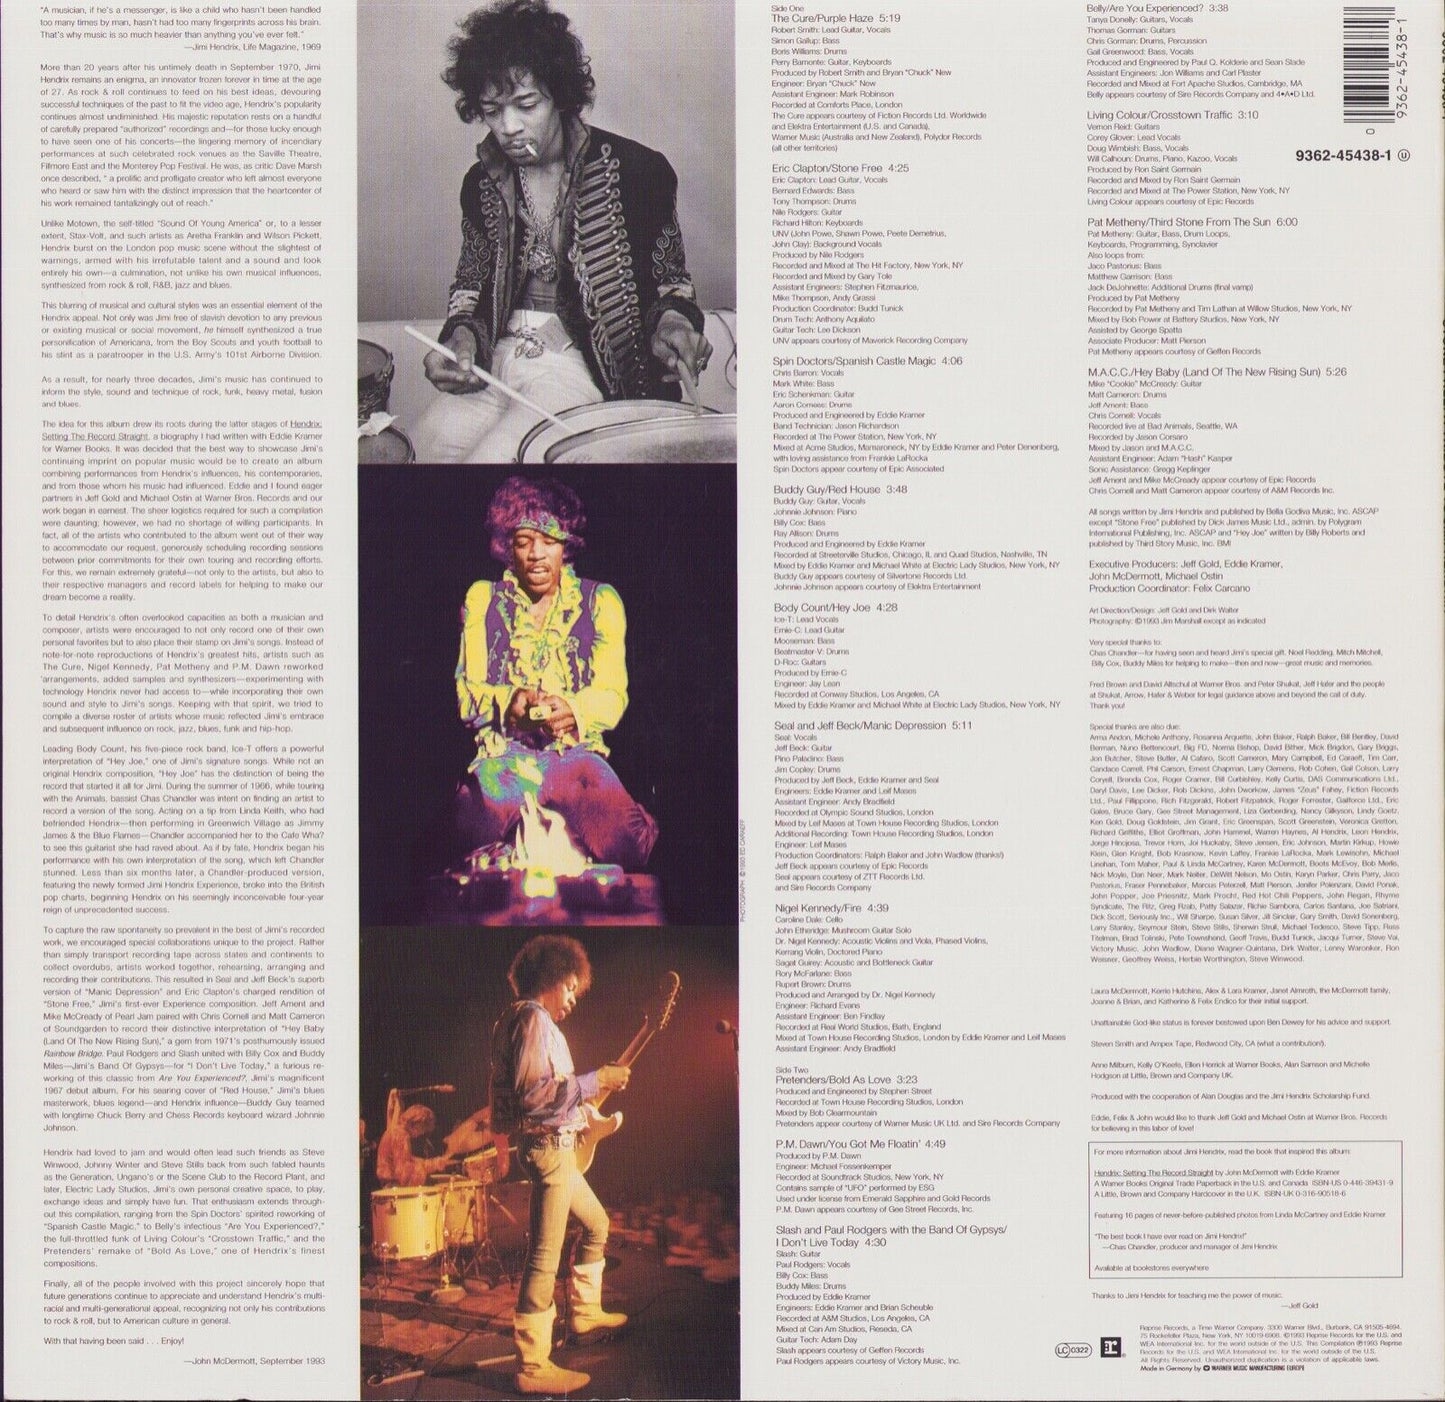 Stone Free A Tribute To Jimi Hendrix Vinyl LP